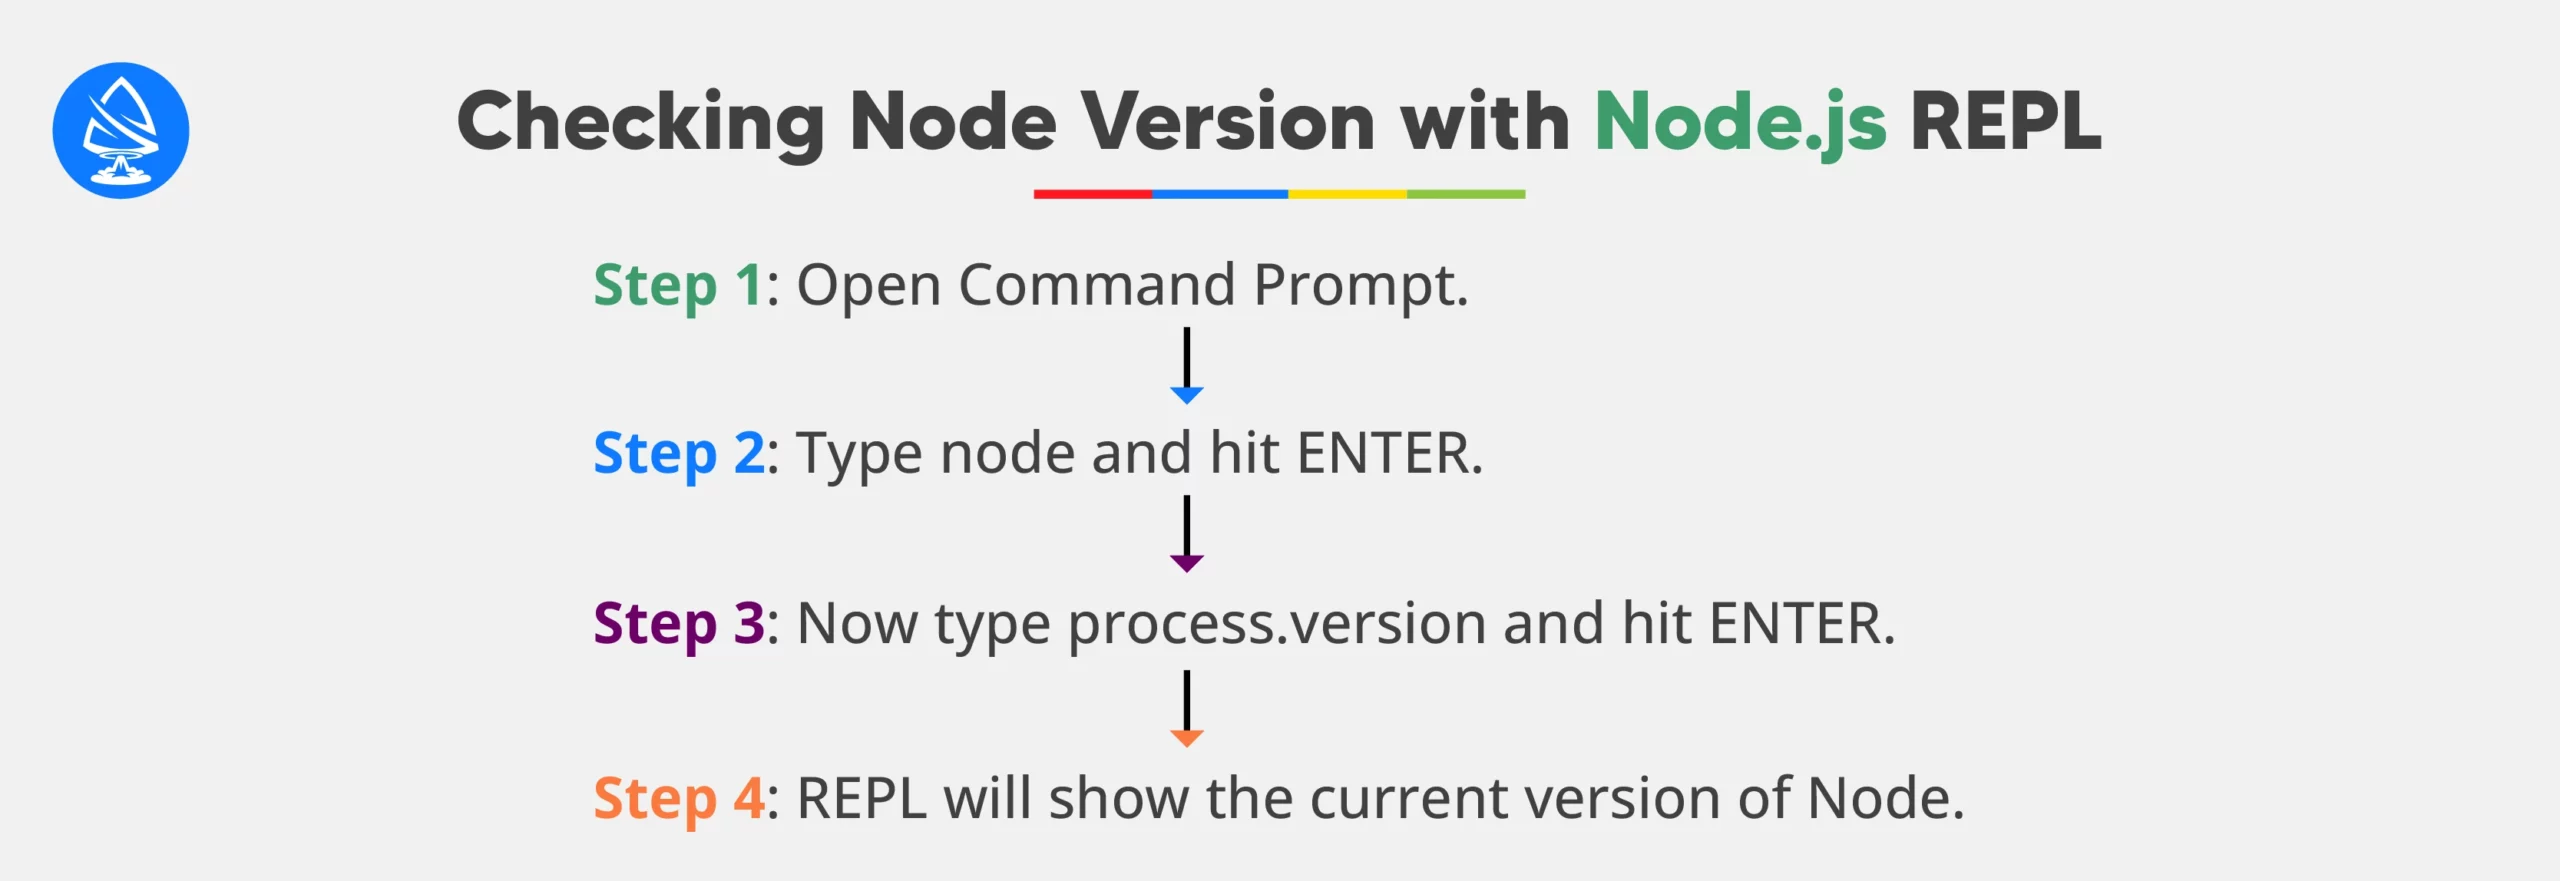 How to Check Node Version using Node.js REPL? 